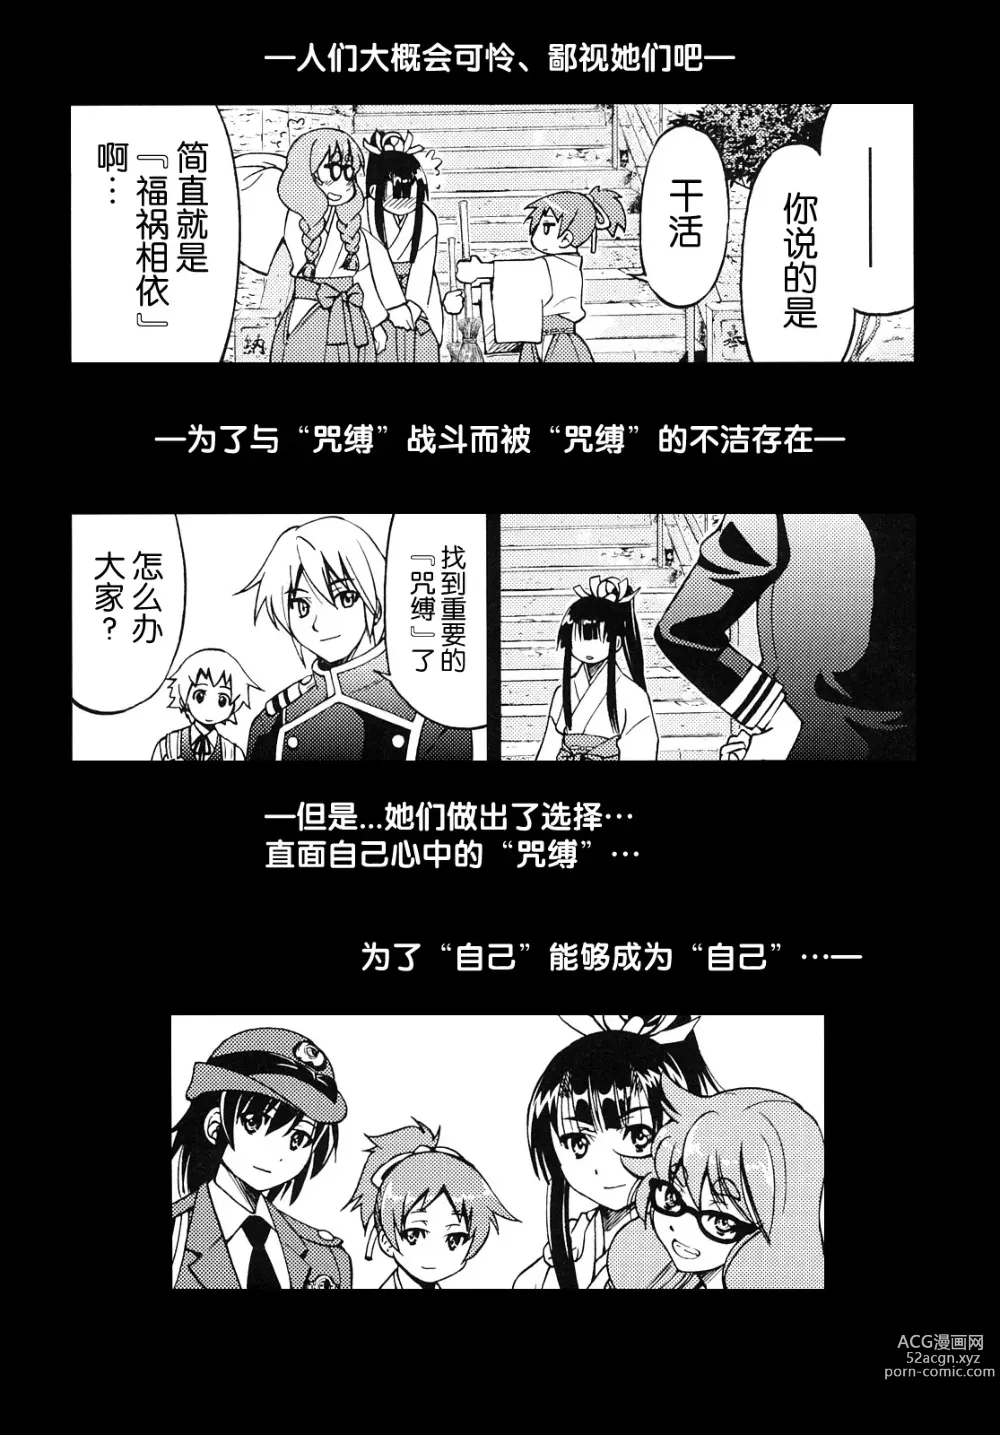 Page 207 of manga Shibarare Hime